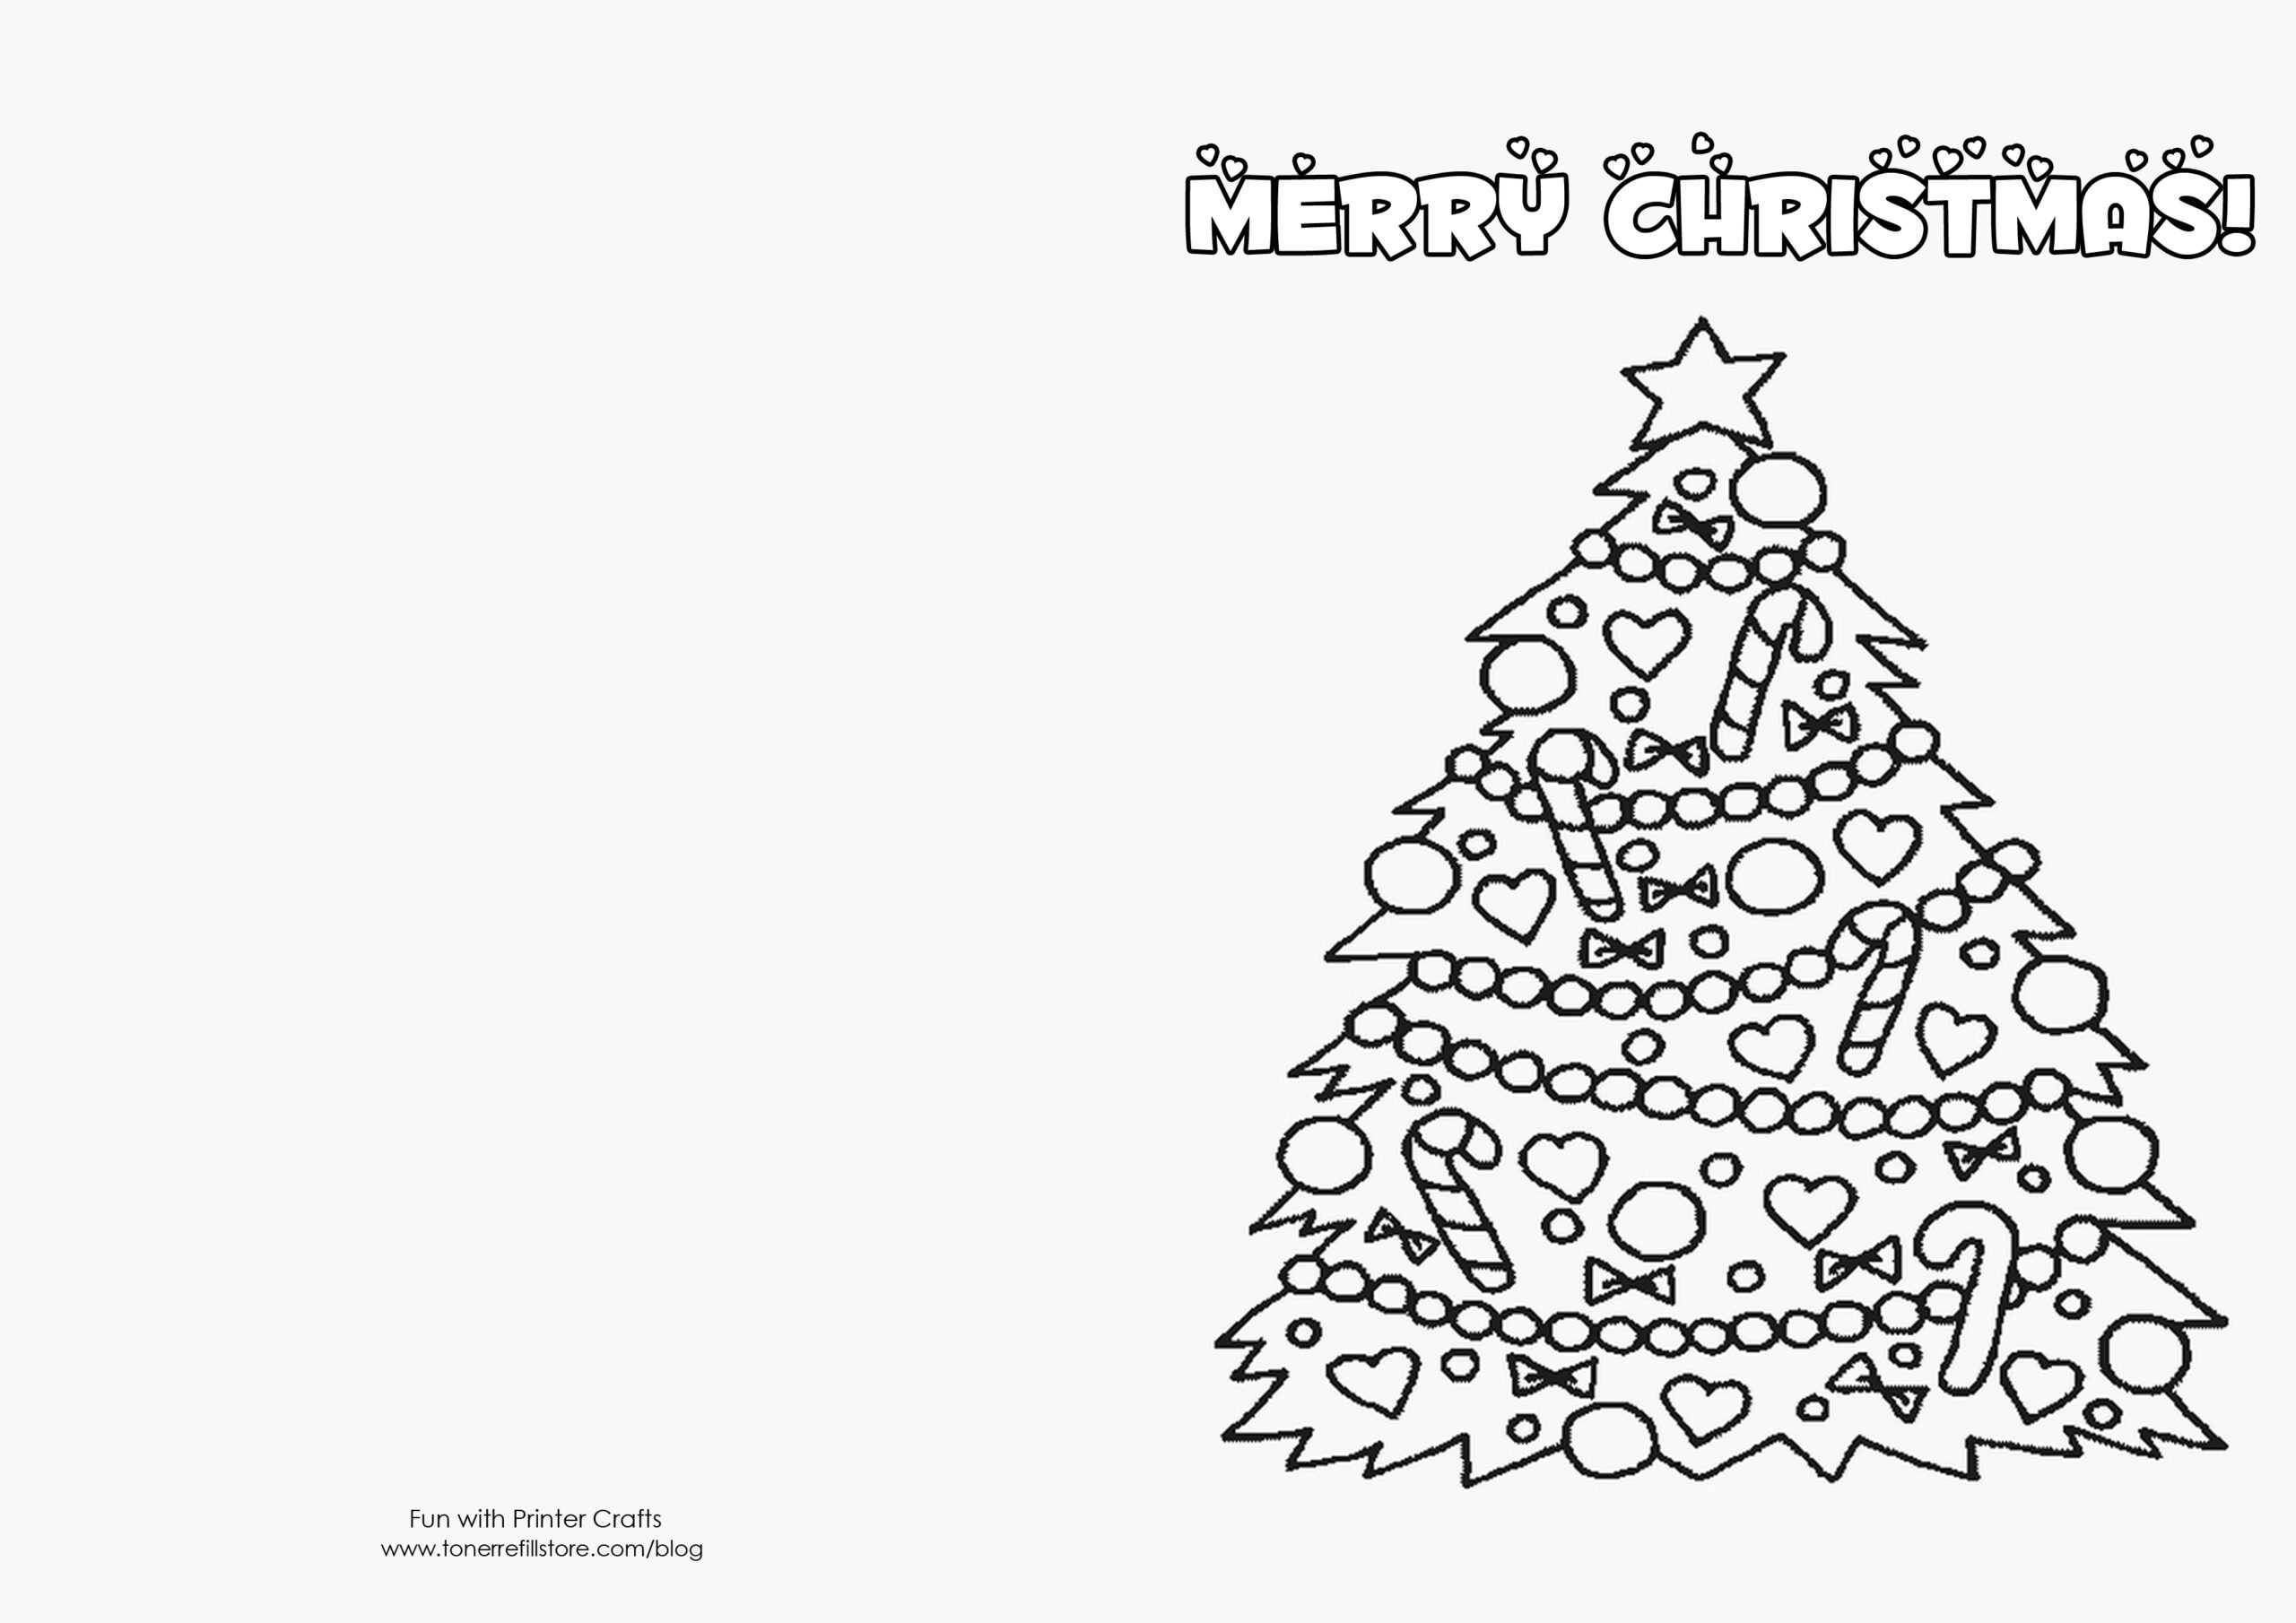 Free Printable Christmas Card Templates For Kids – Christmas With Regard To Print Your Own Christmas Cards Templates